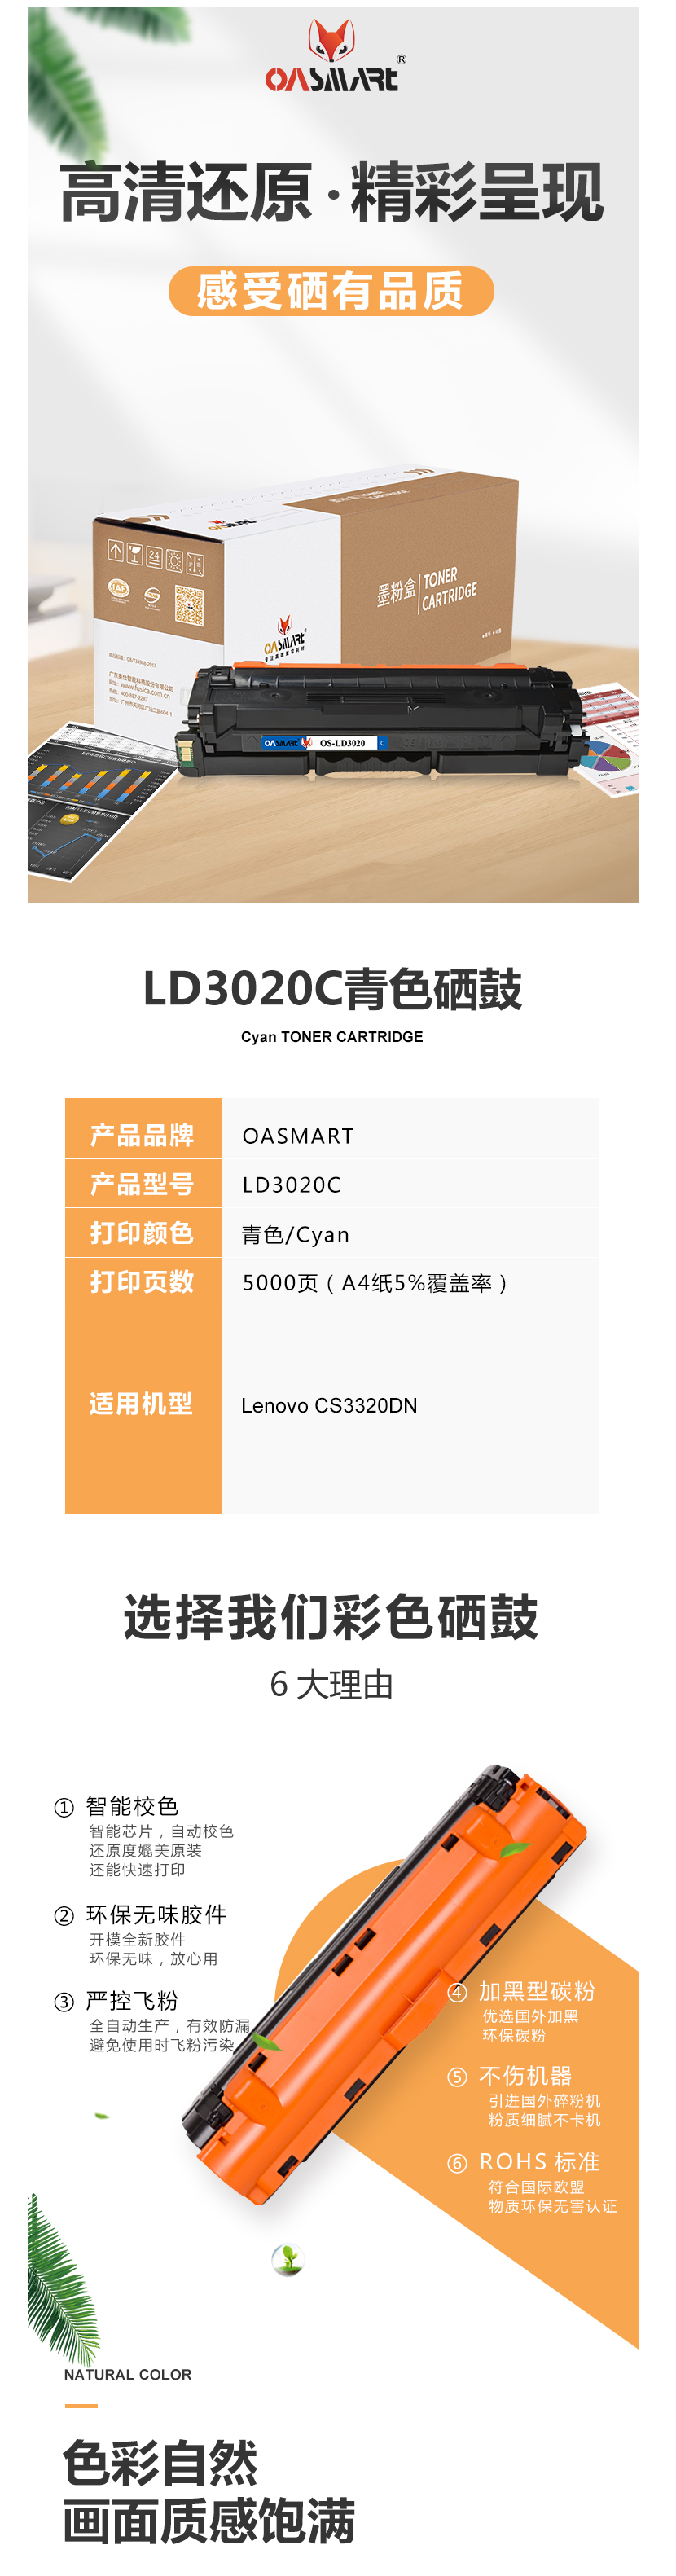 FireShot Capture 105 - 【OASMARTLD3020C】OAsamrt（欧司特） LD3020C_ - https___item.jd.com_100010323281.html.png